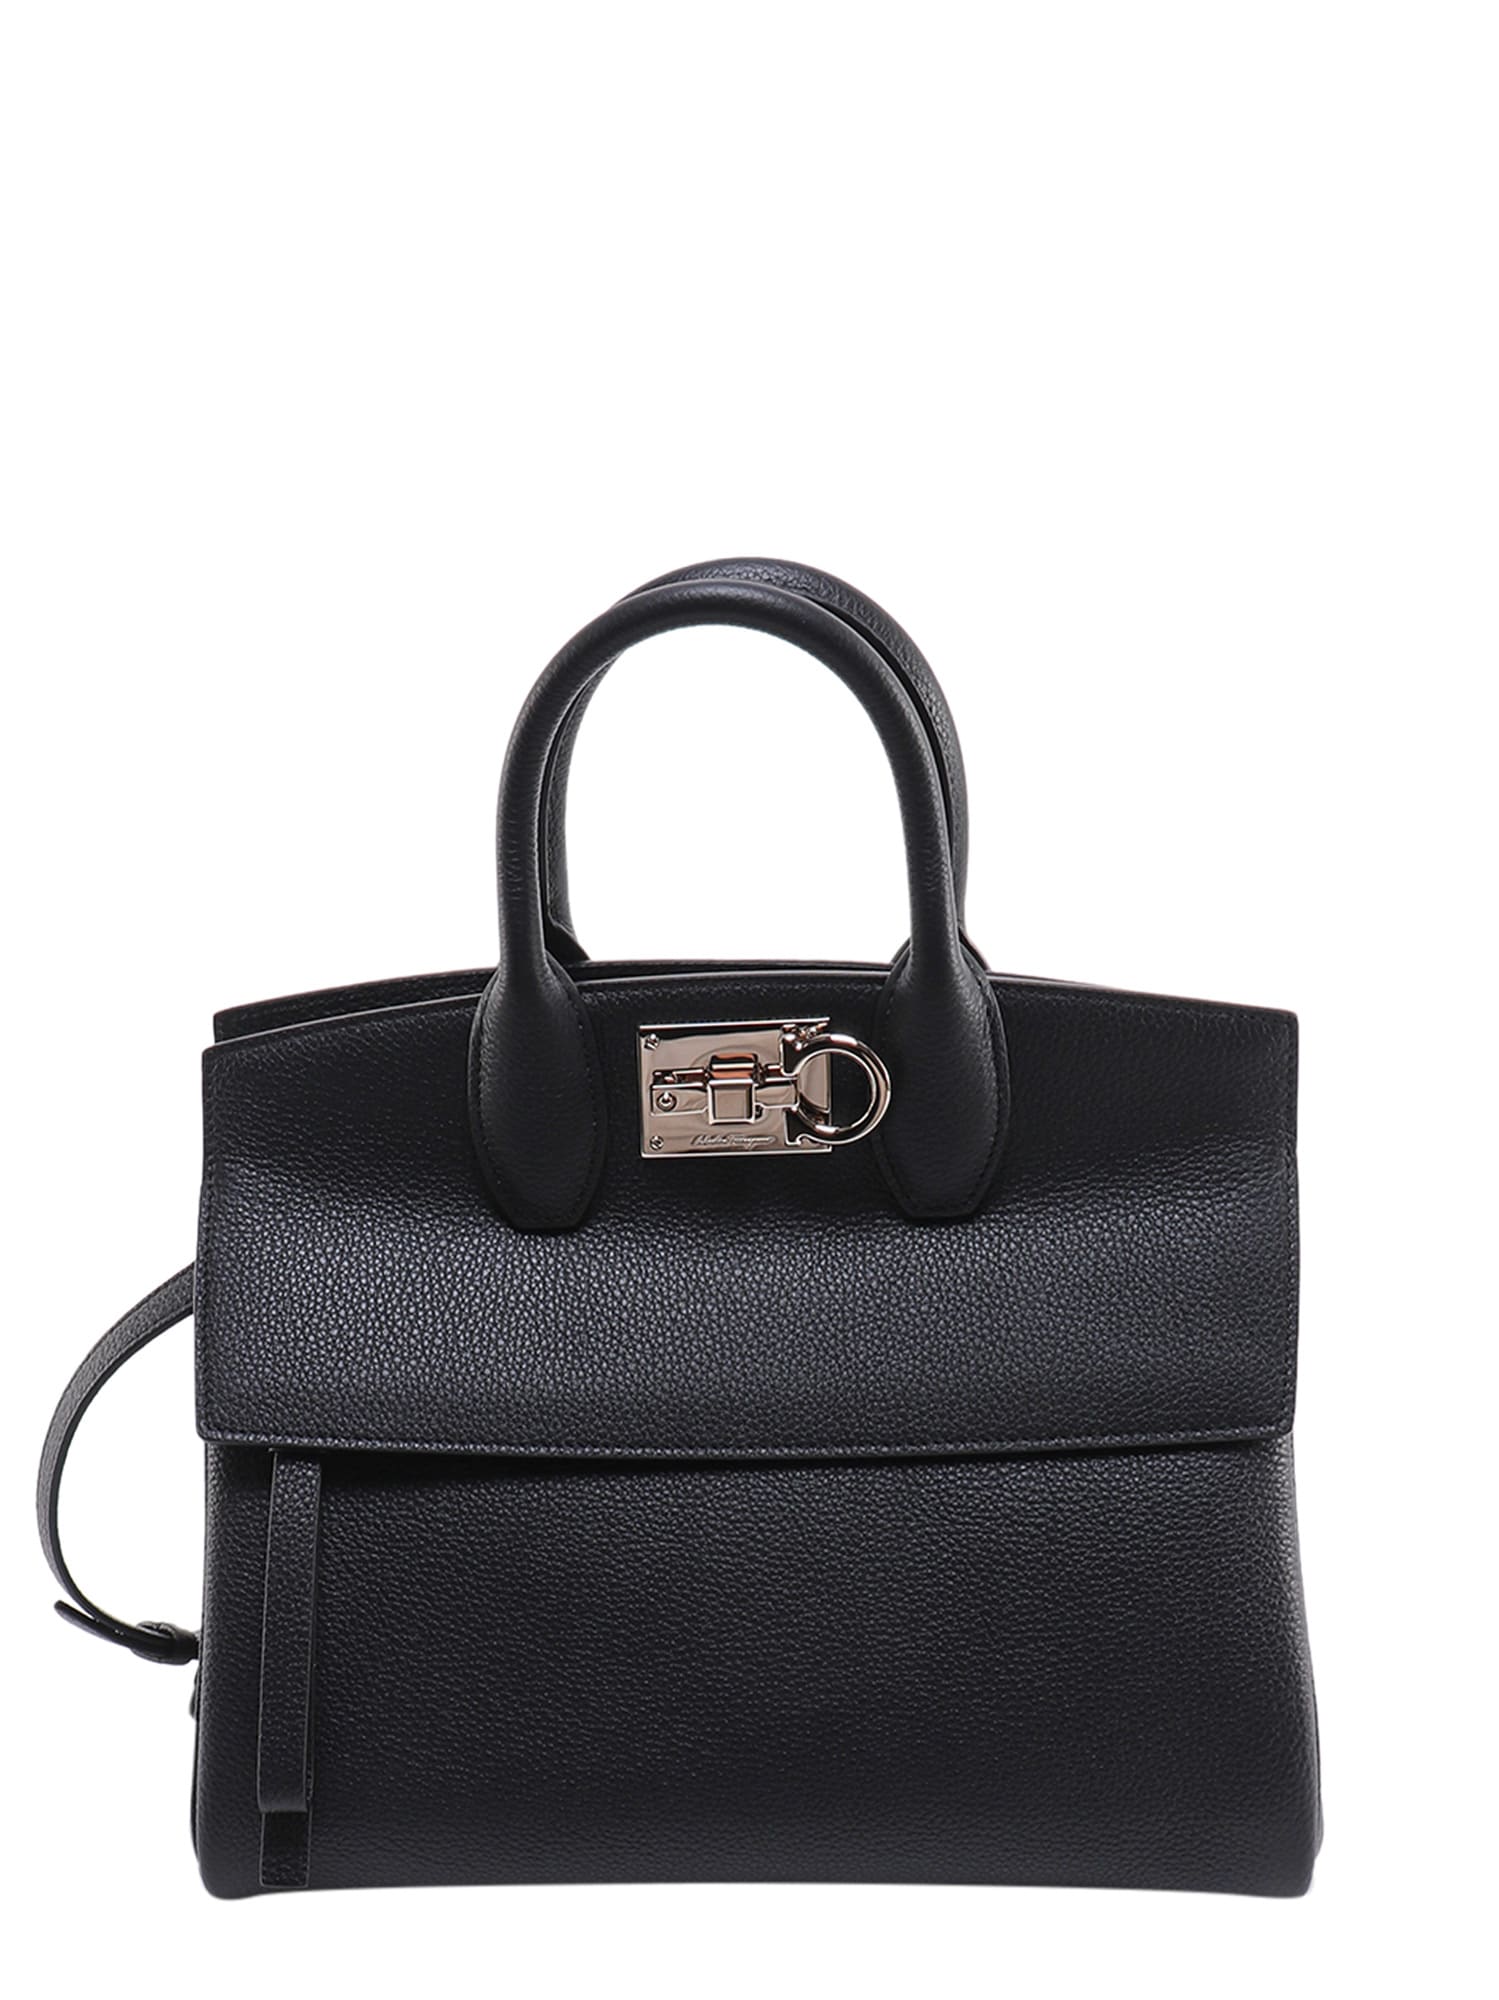 Ferragamo The Studio Handbag In Black